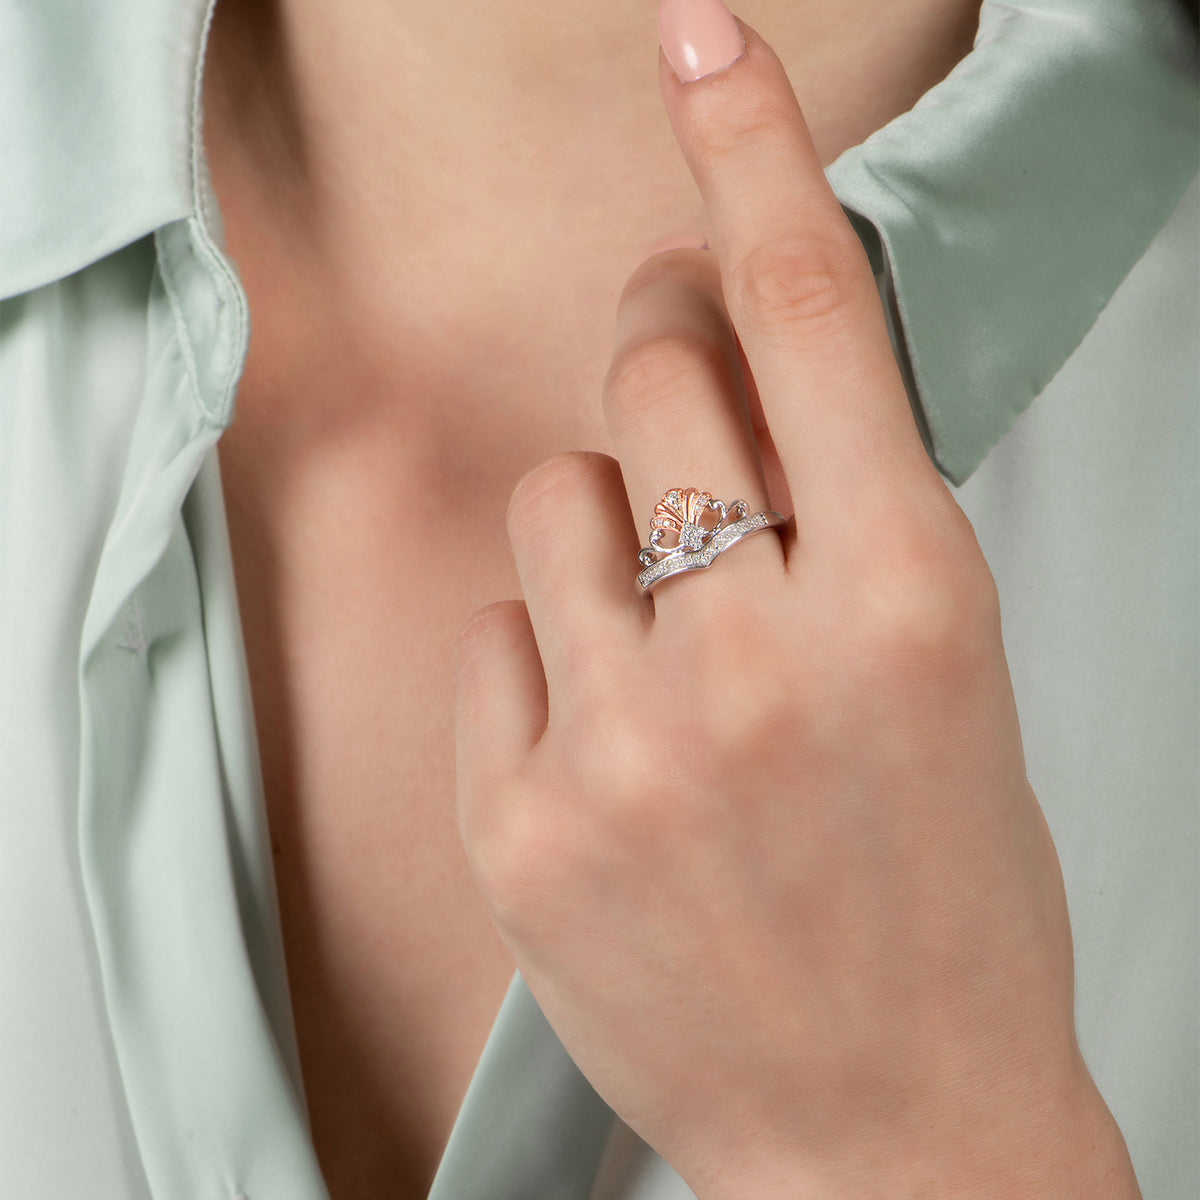 Disney Ariel Inspired Diamond Tiara Ring in 10K Sterling Silver